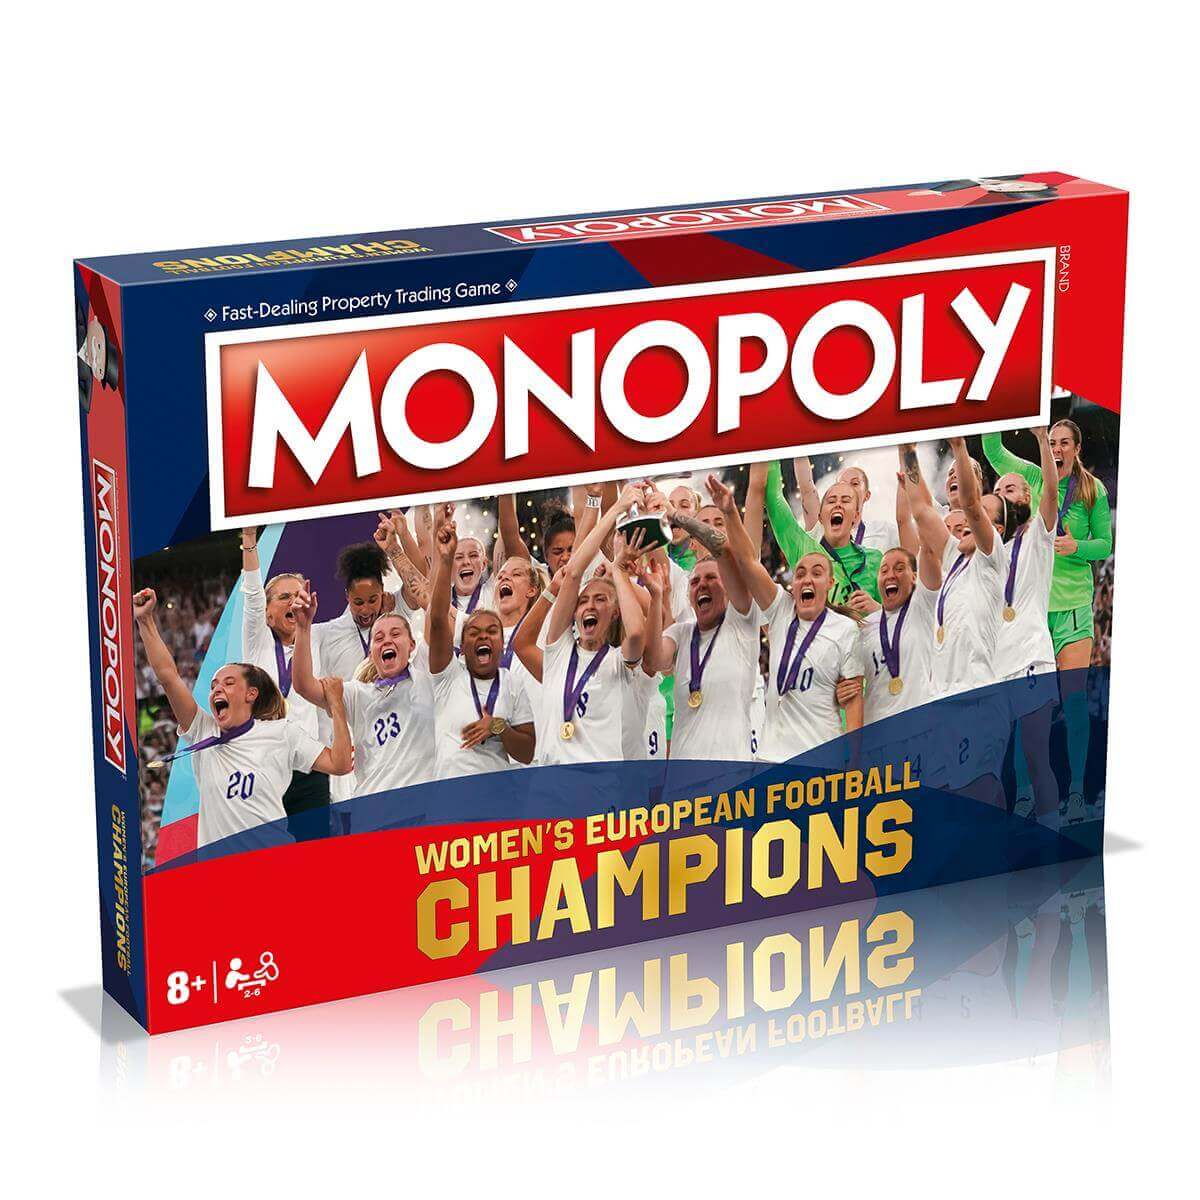 World Football Stars Monopoly